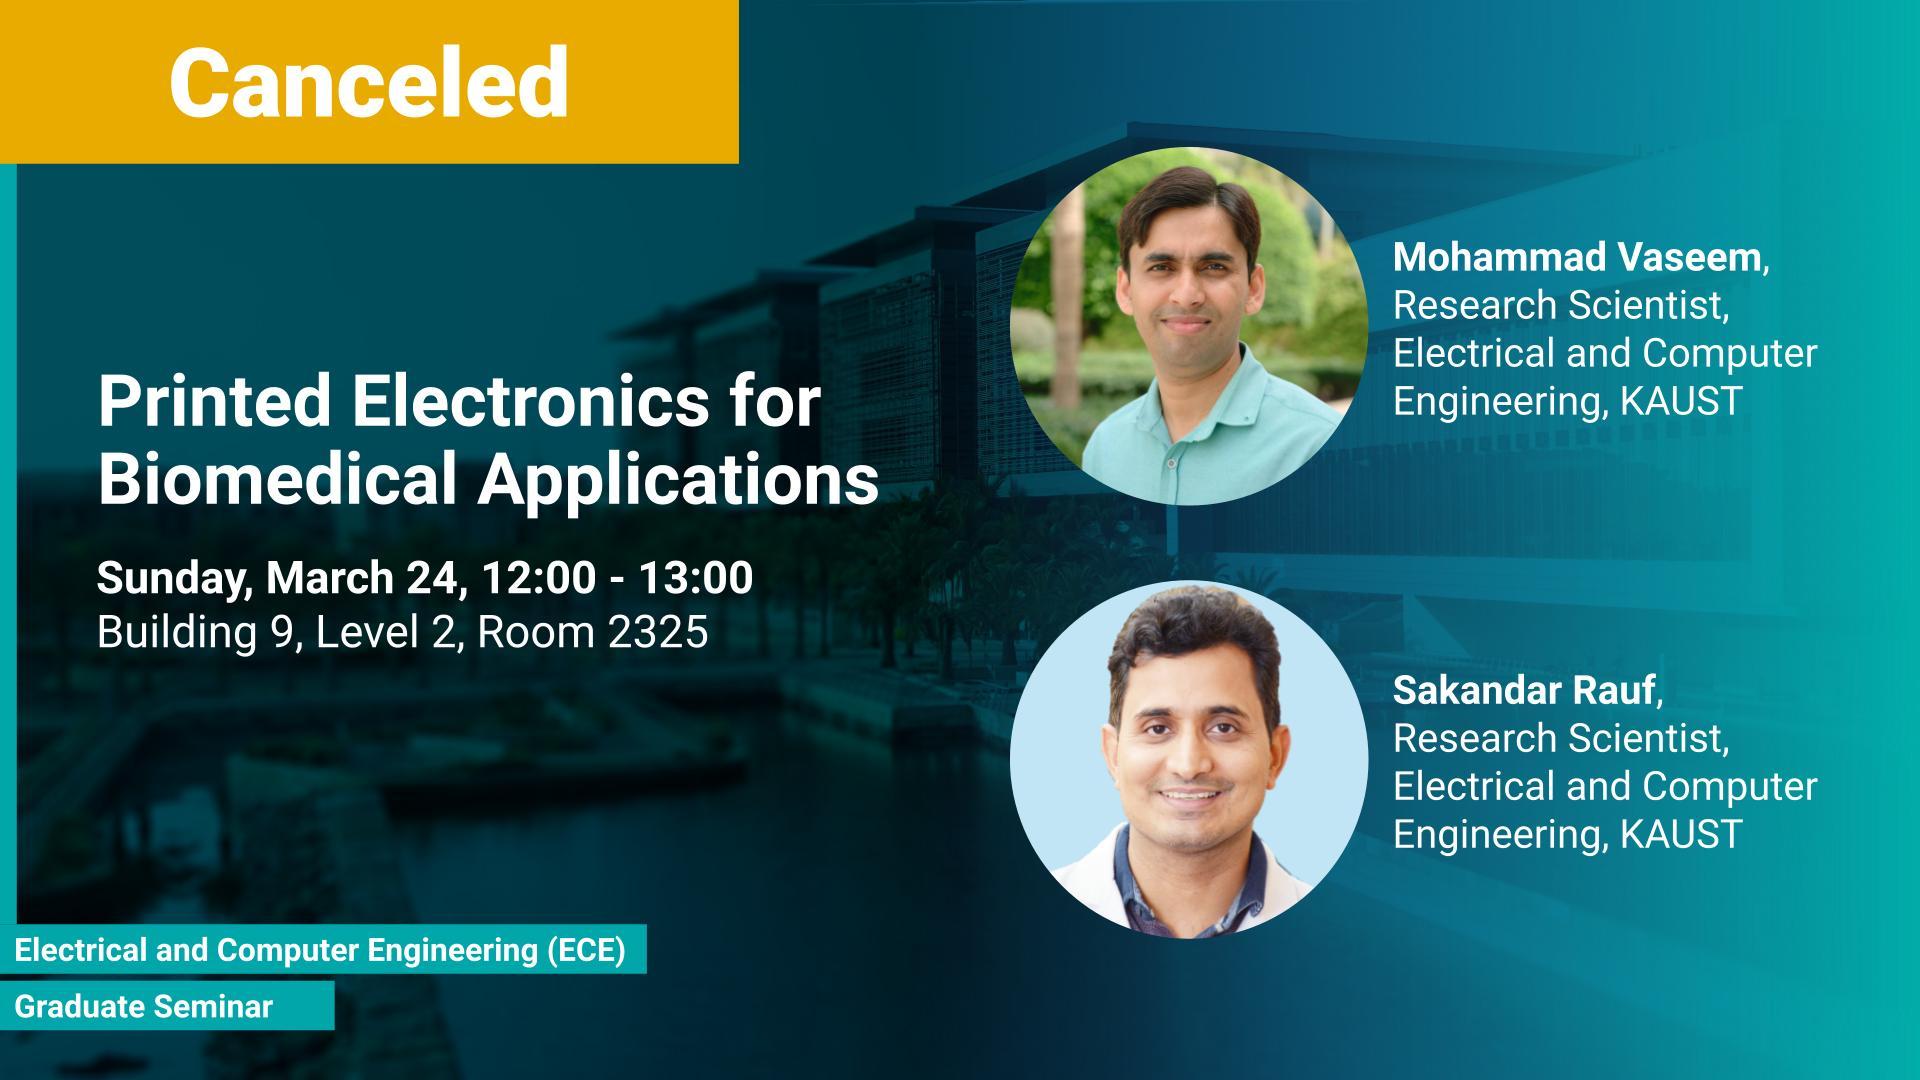 KAUST-CEMSE-ECE-Graduate-Seminar-Mohammad-Vaseem-and-Sakandar-Printed-Electronics-for-Biomedical-Applications